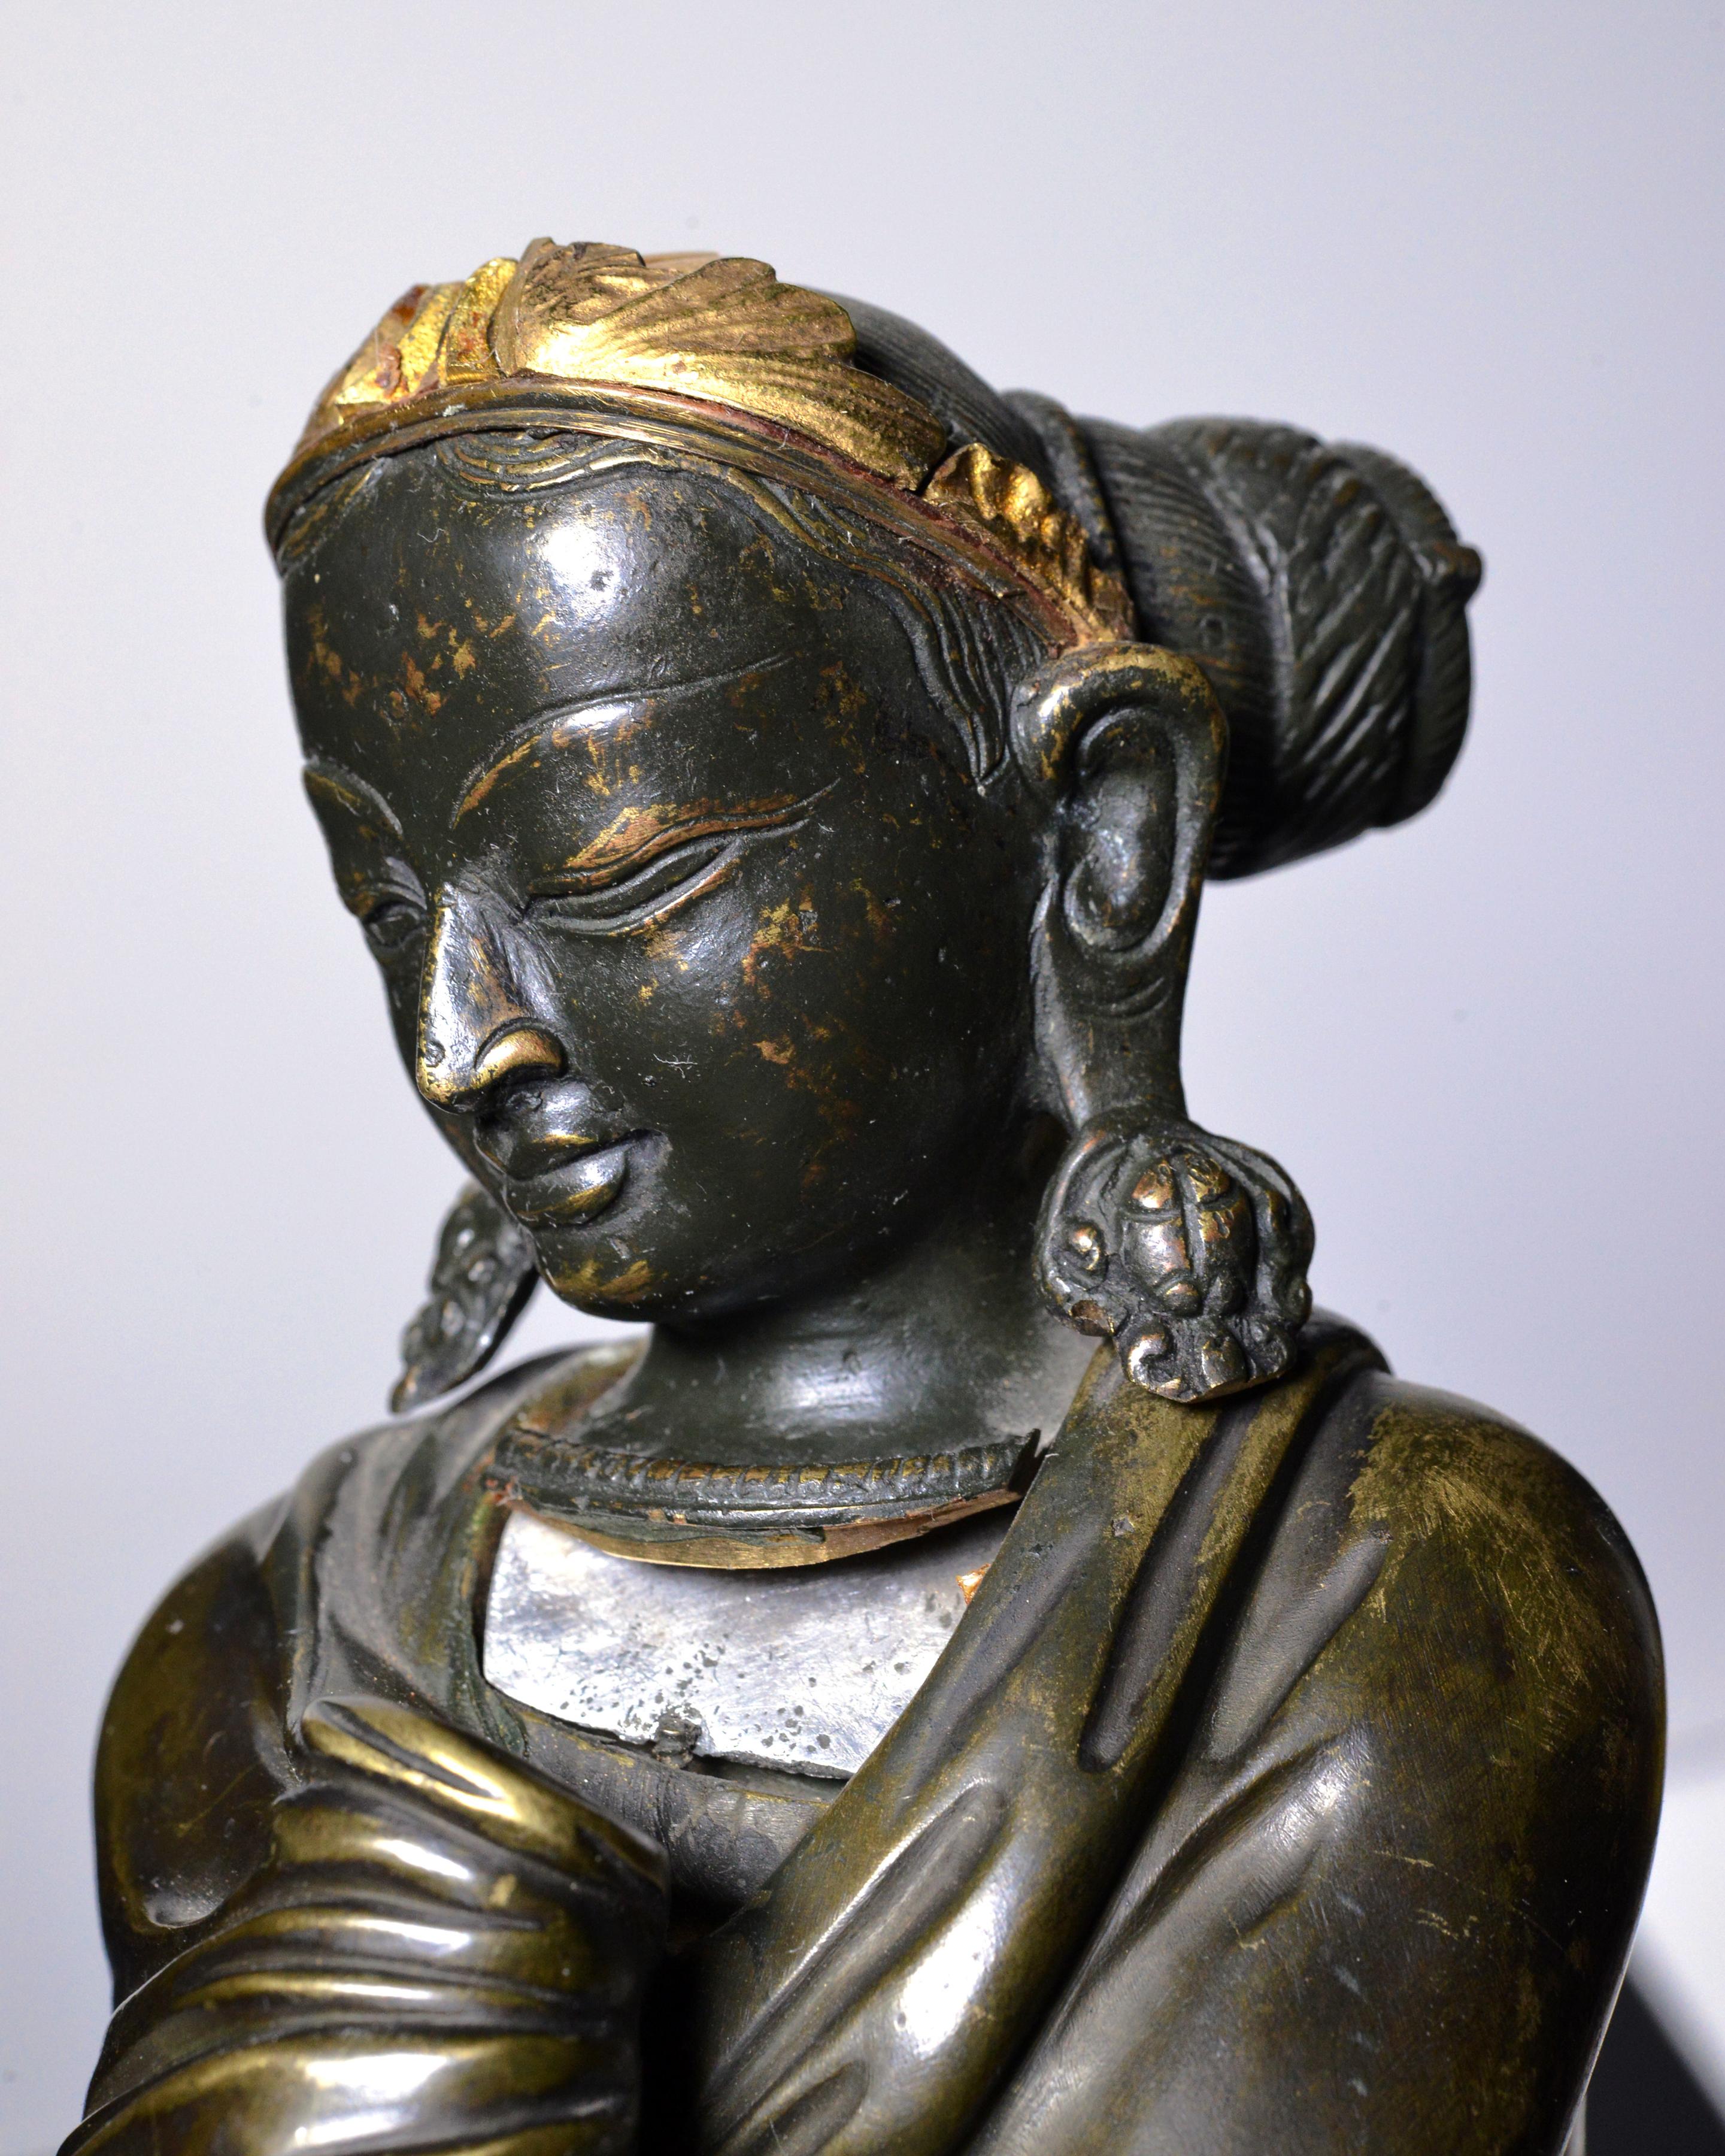 19th Century Sridevi East Asian Hindu Deity Goddess bronze Figurine Antique 18th-19th century For Sale